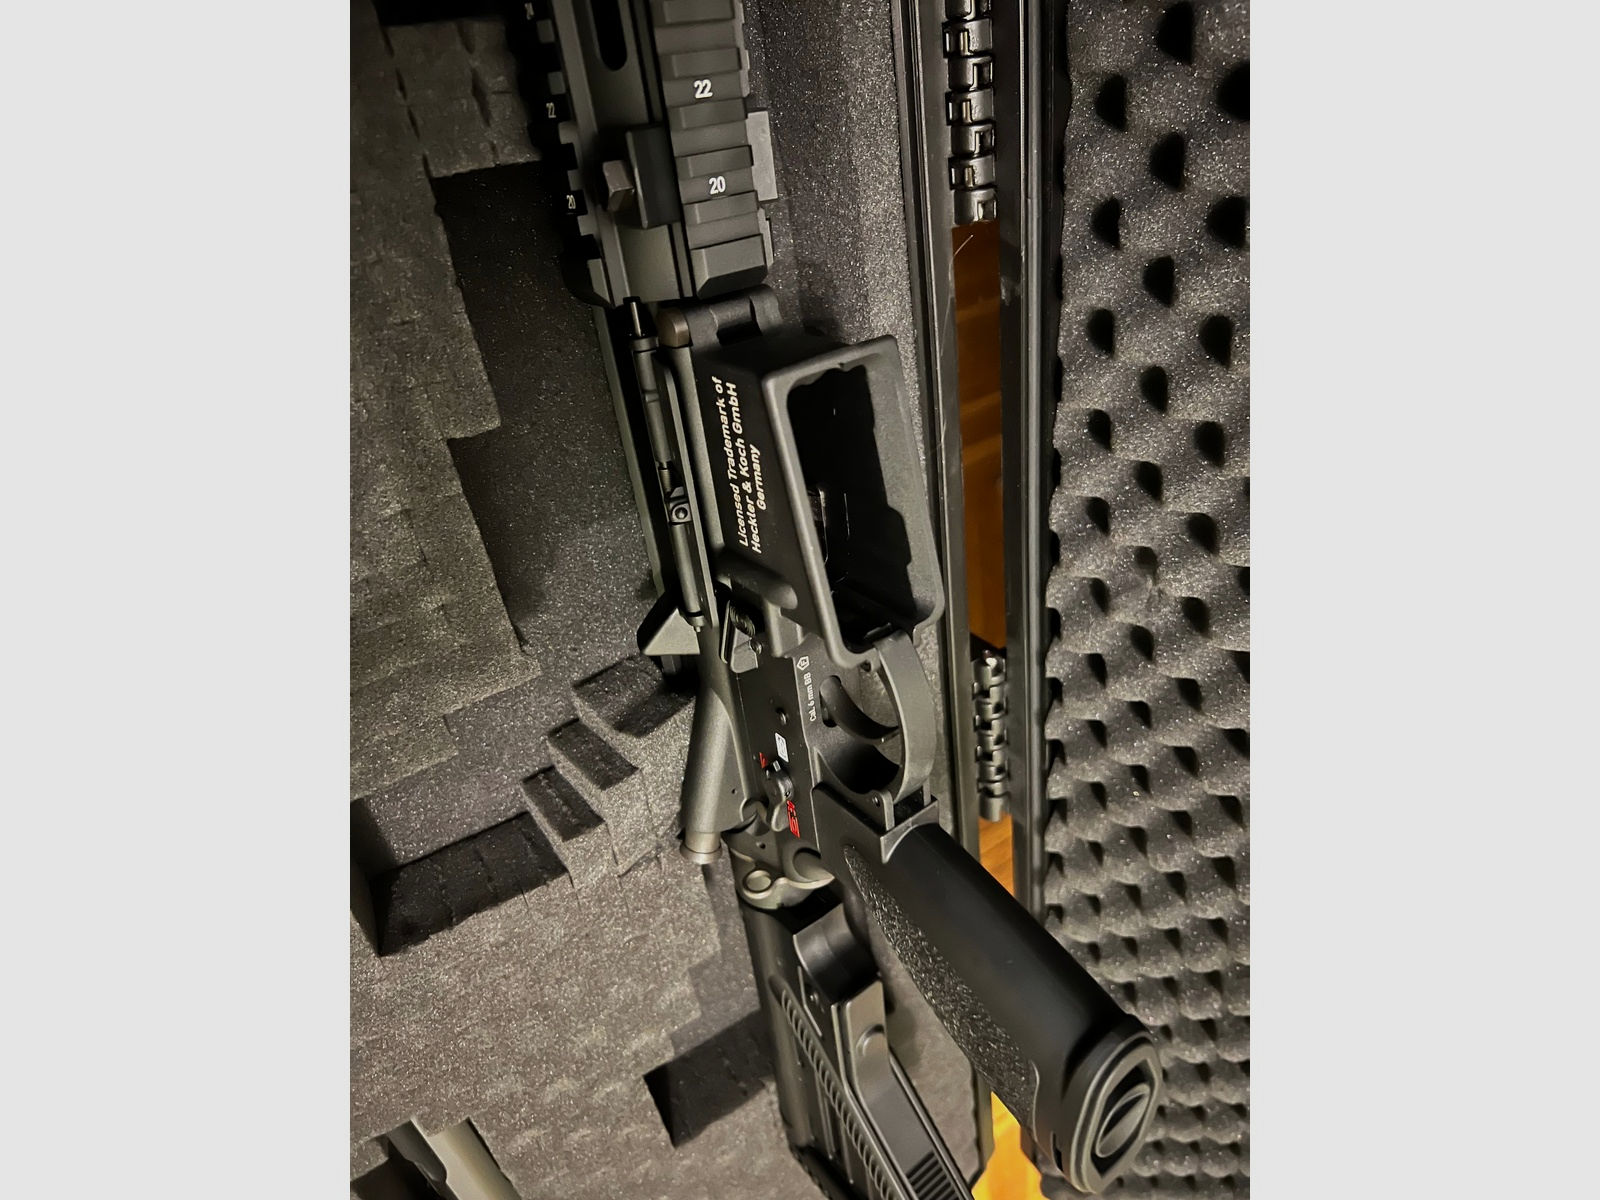 HK 416 GBB 6mm Vollmetall 